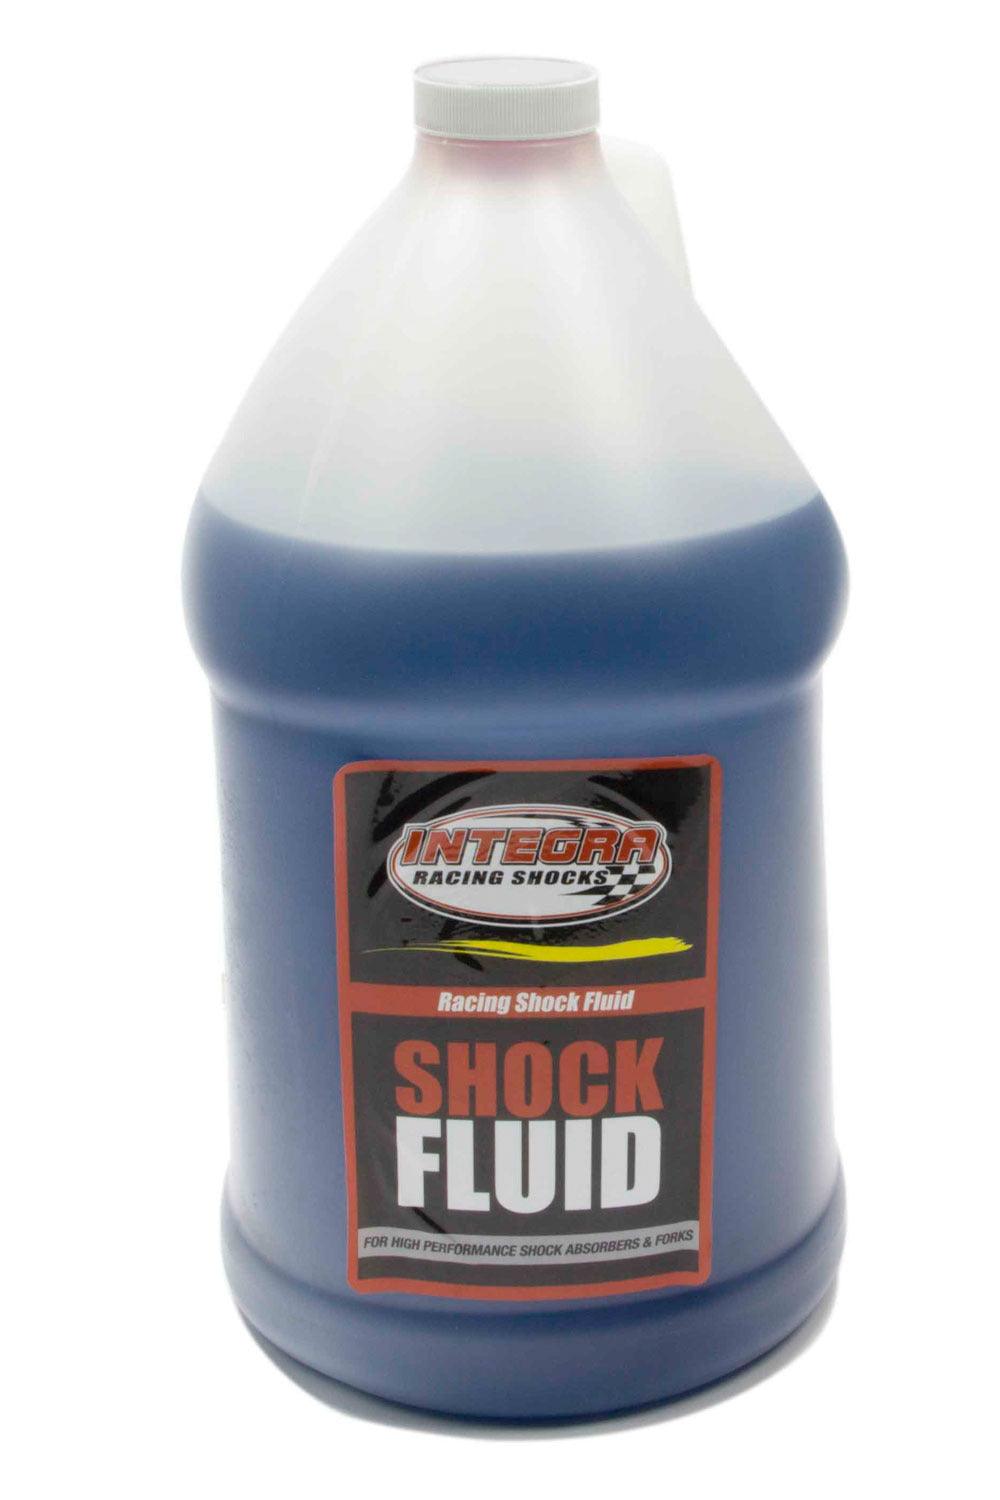 Shock Oil Gallon - Burlile Performance Products